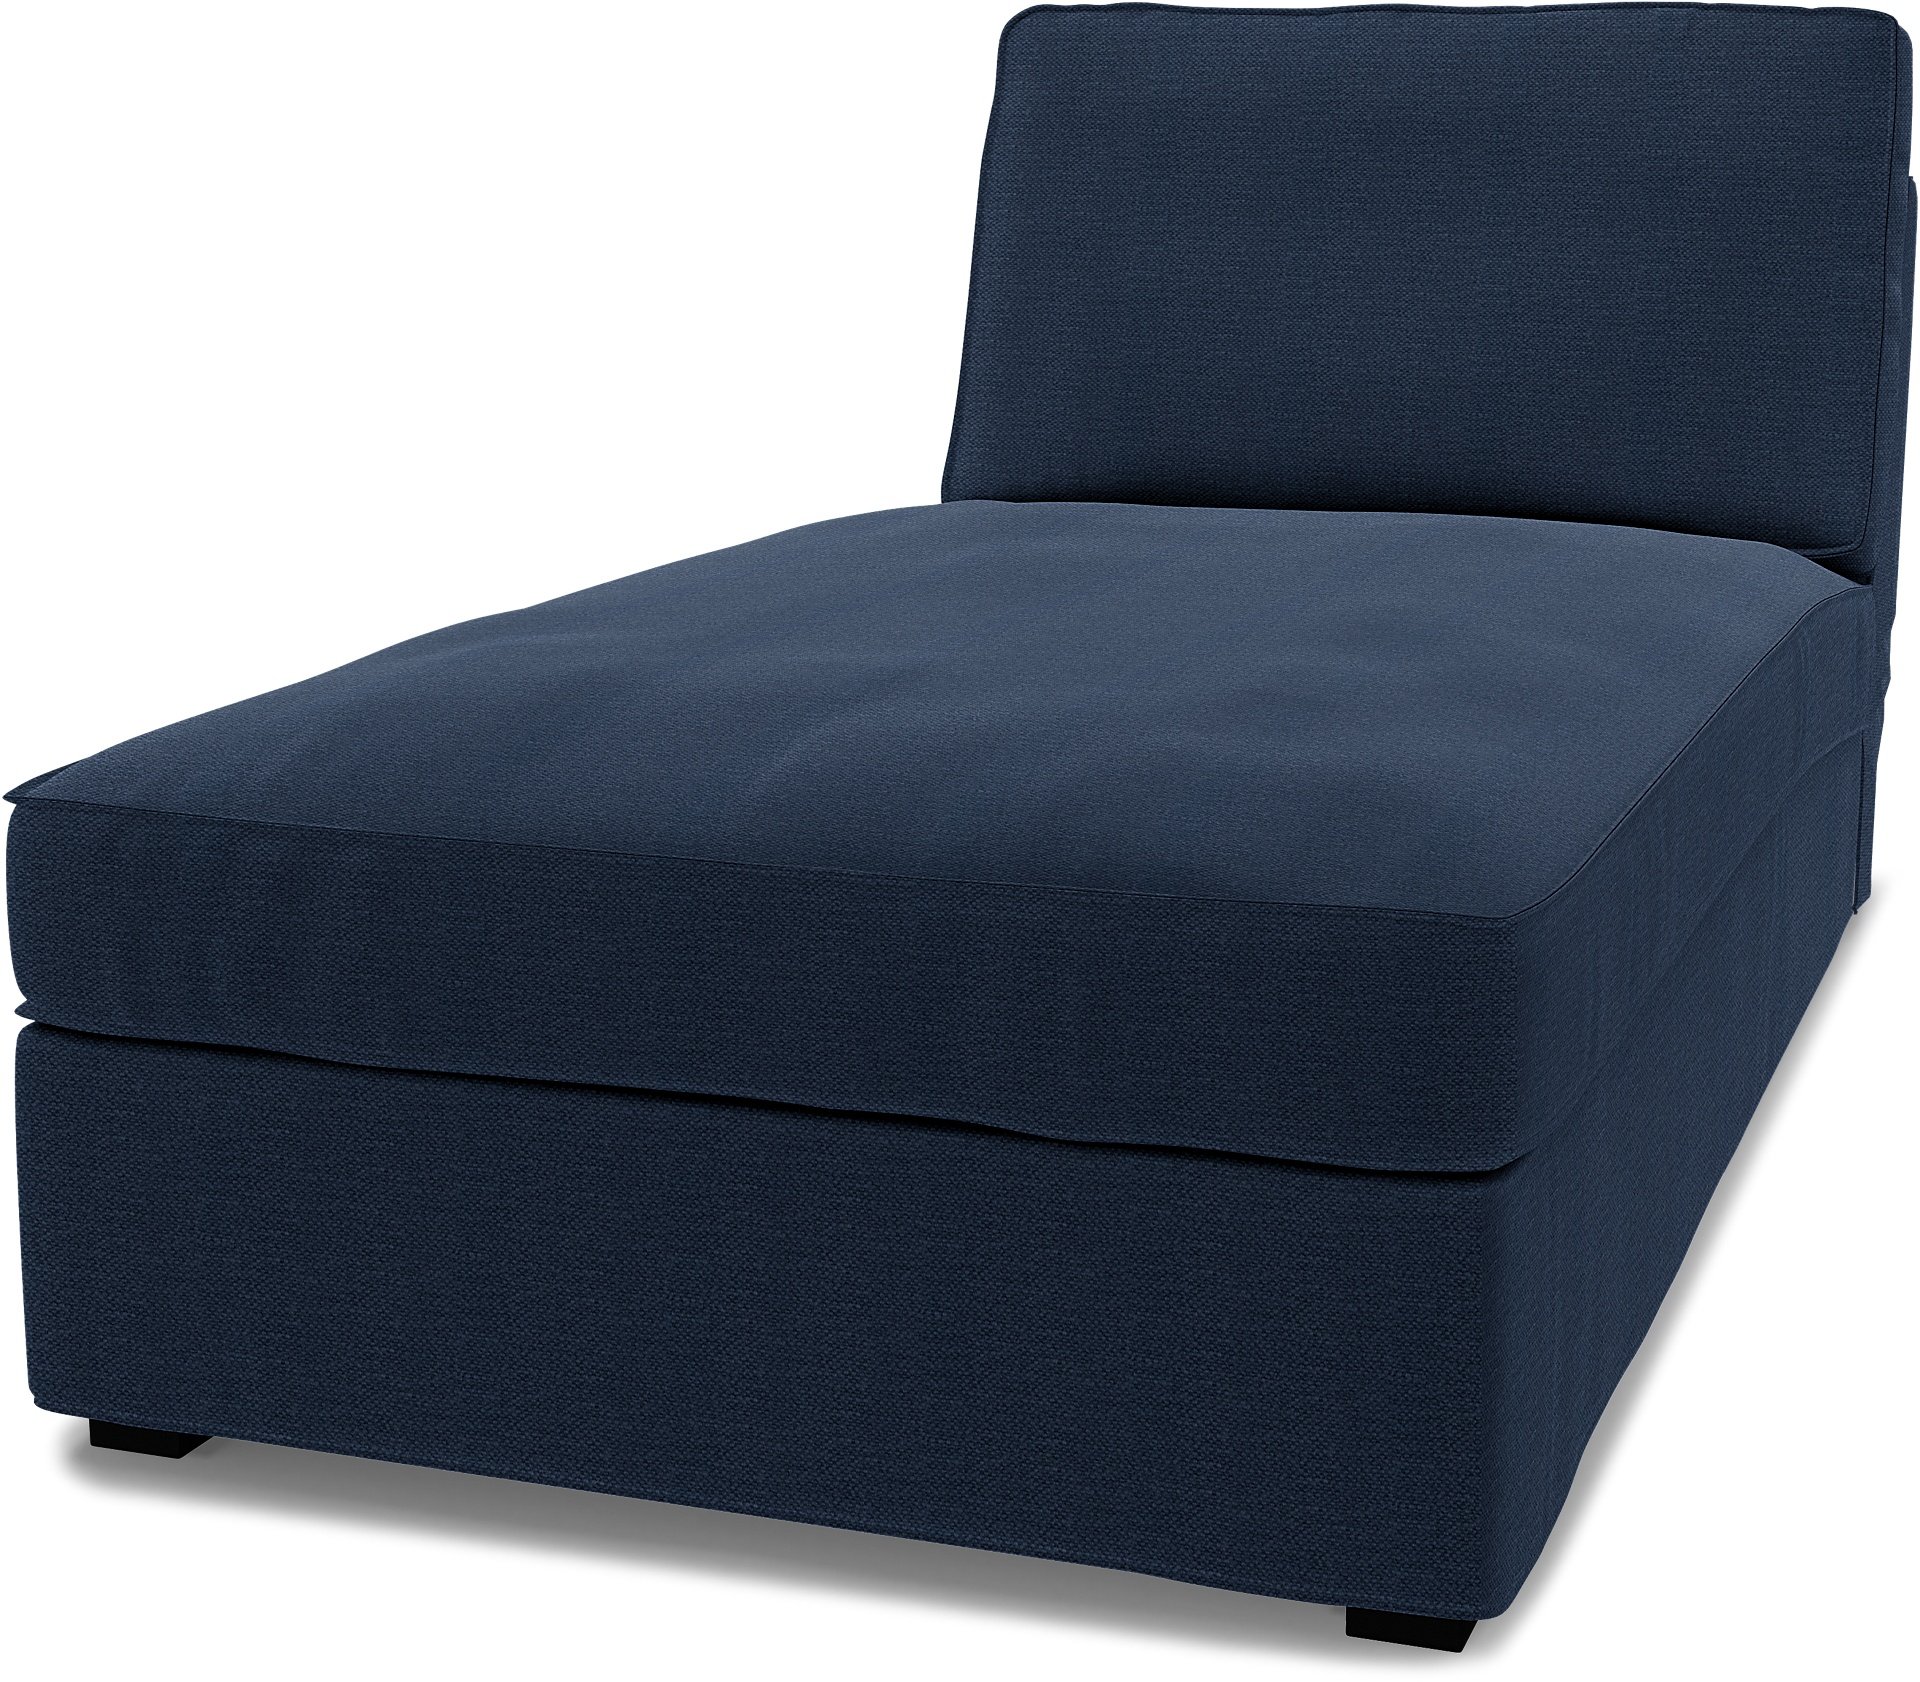 IKEA - Kivik Chaise Longue Cover, Navy Blue, Linen - Bemz